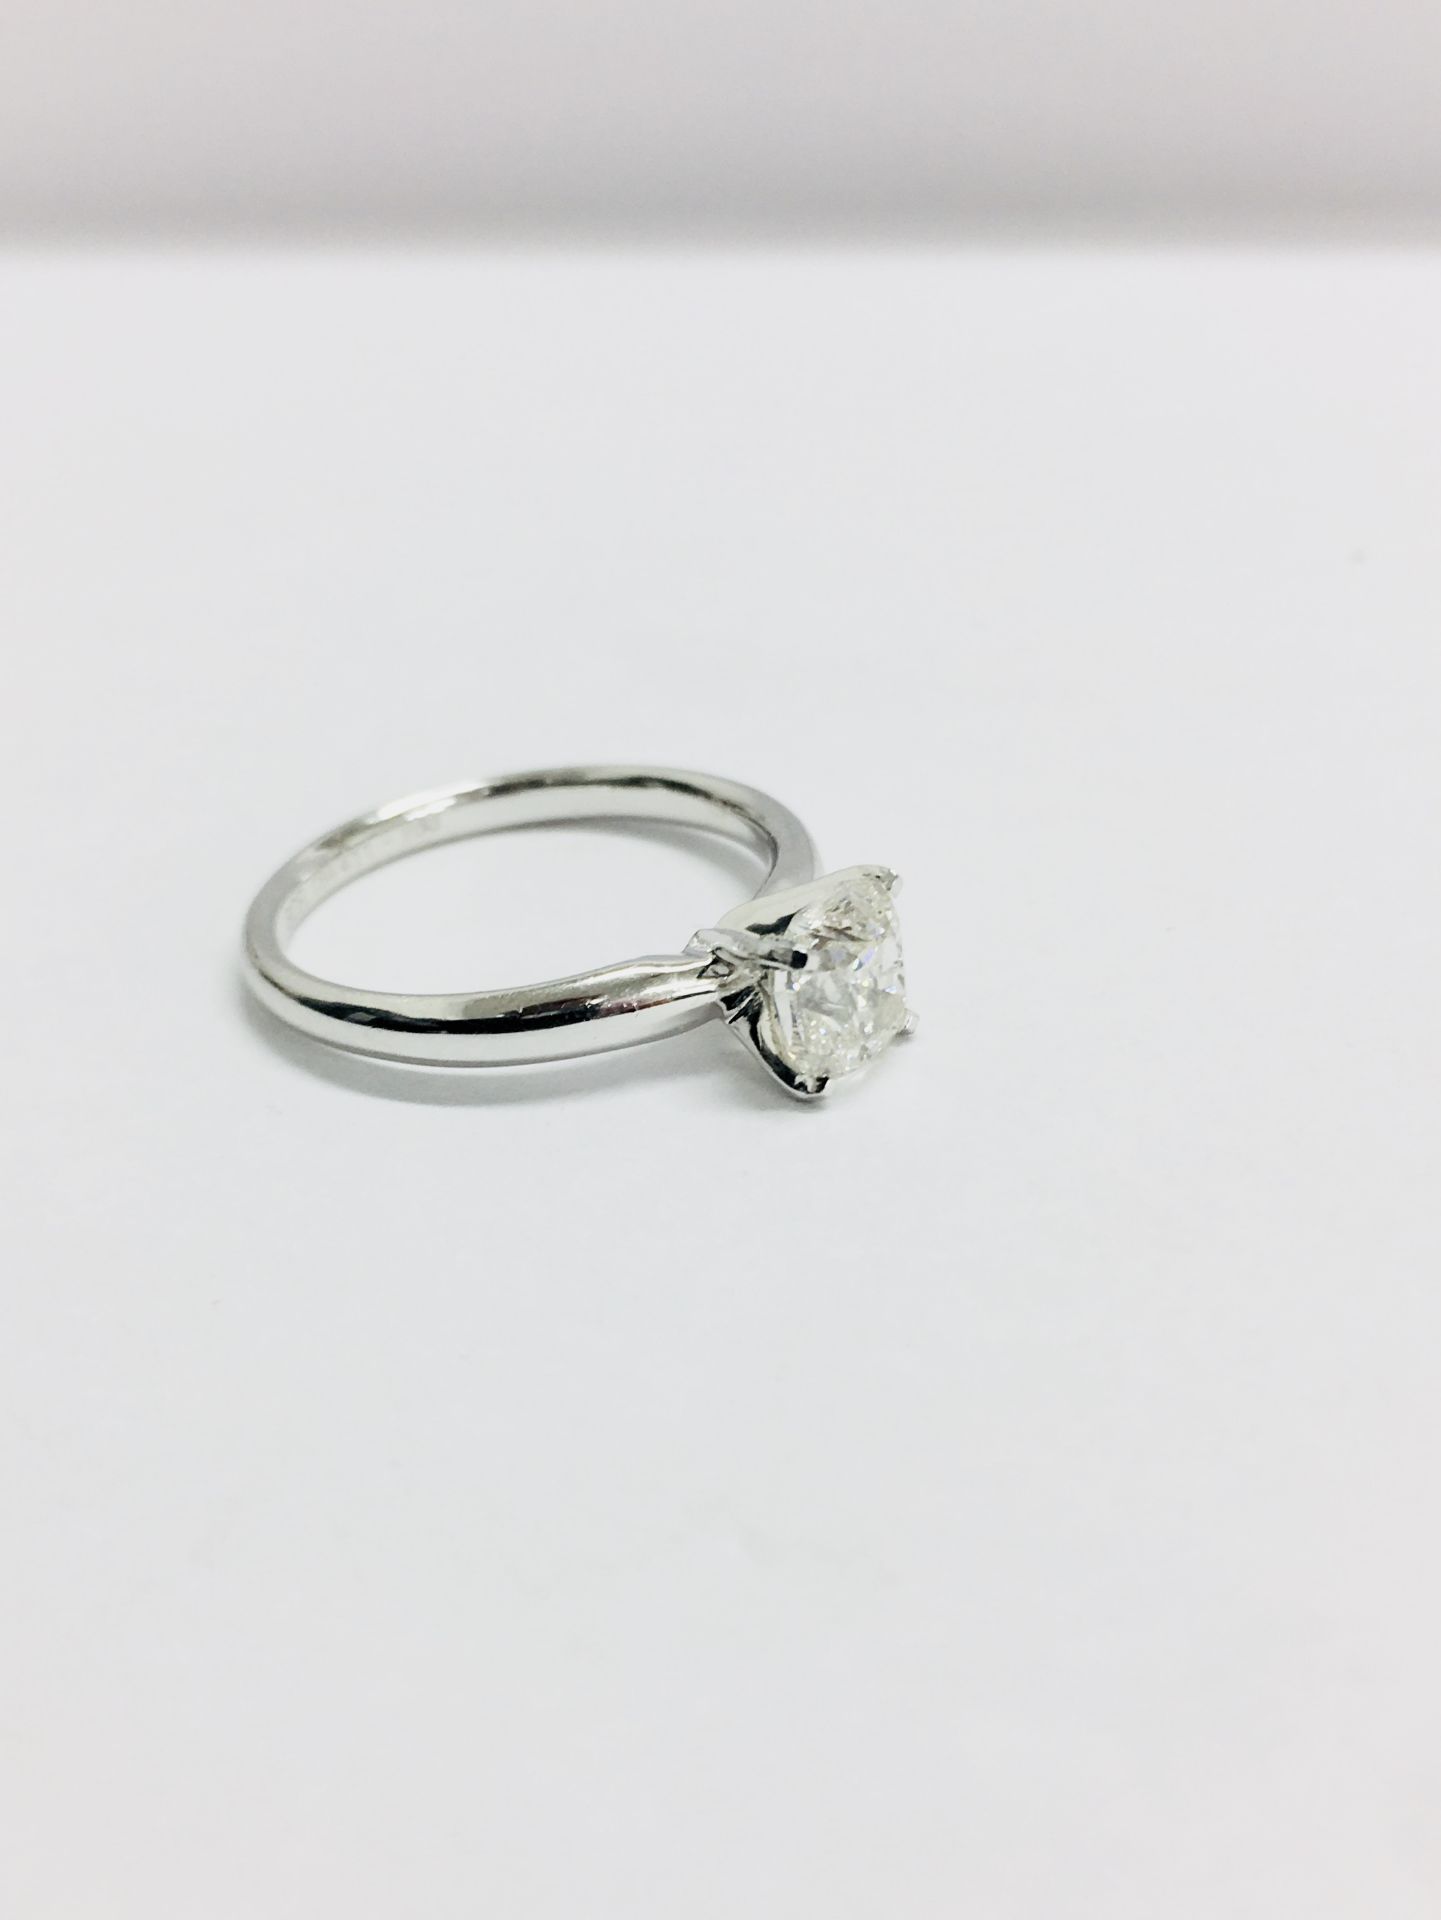 1c t cushion cut diamond solitaires ring,1ct cushion cut H colour vs 1 clarity,platinum setting - Image 4 of 6